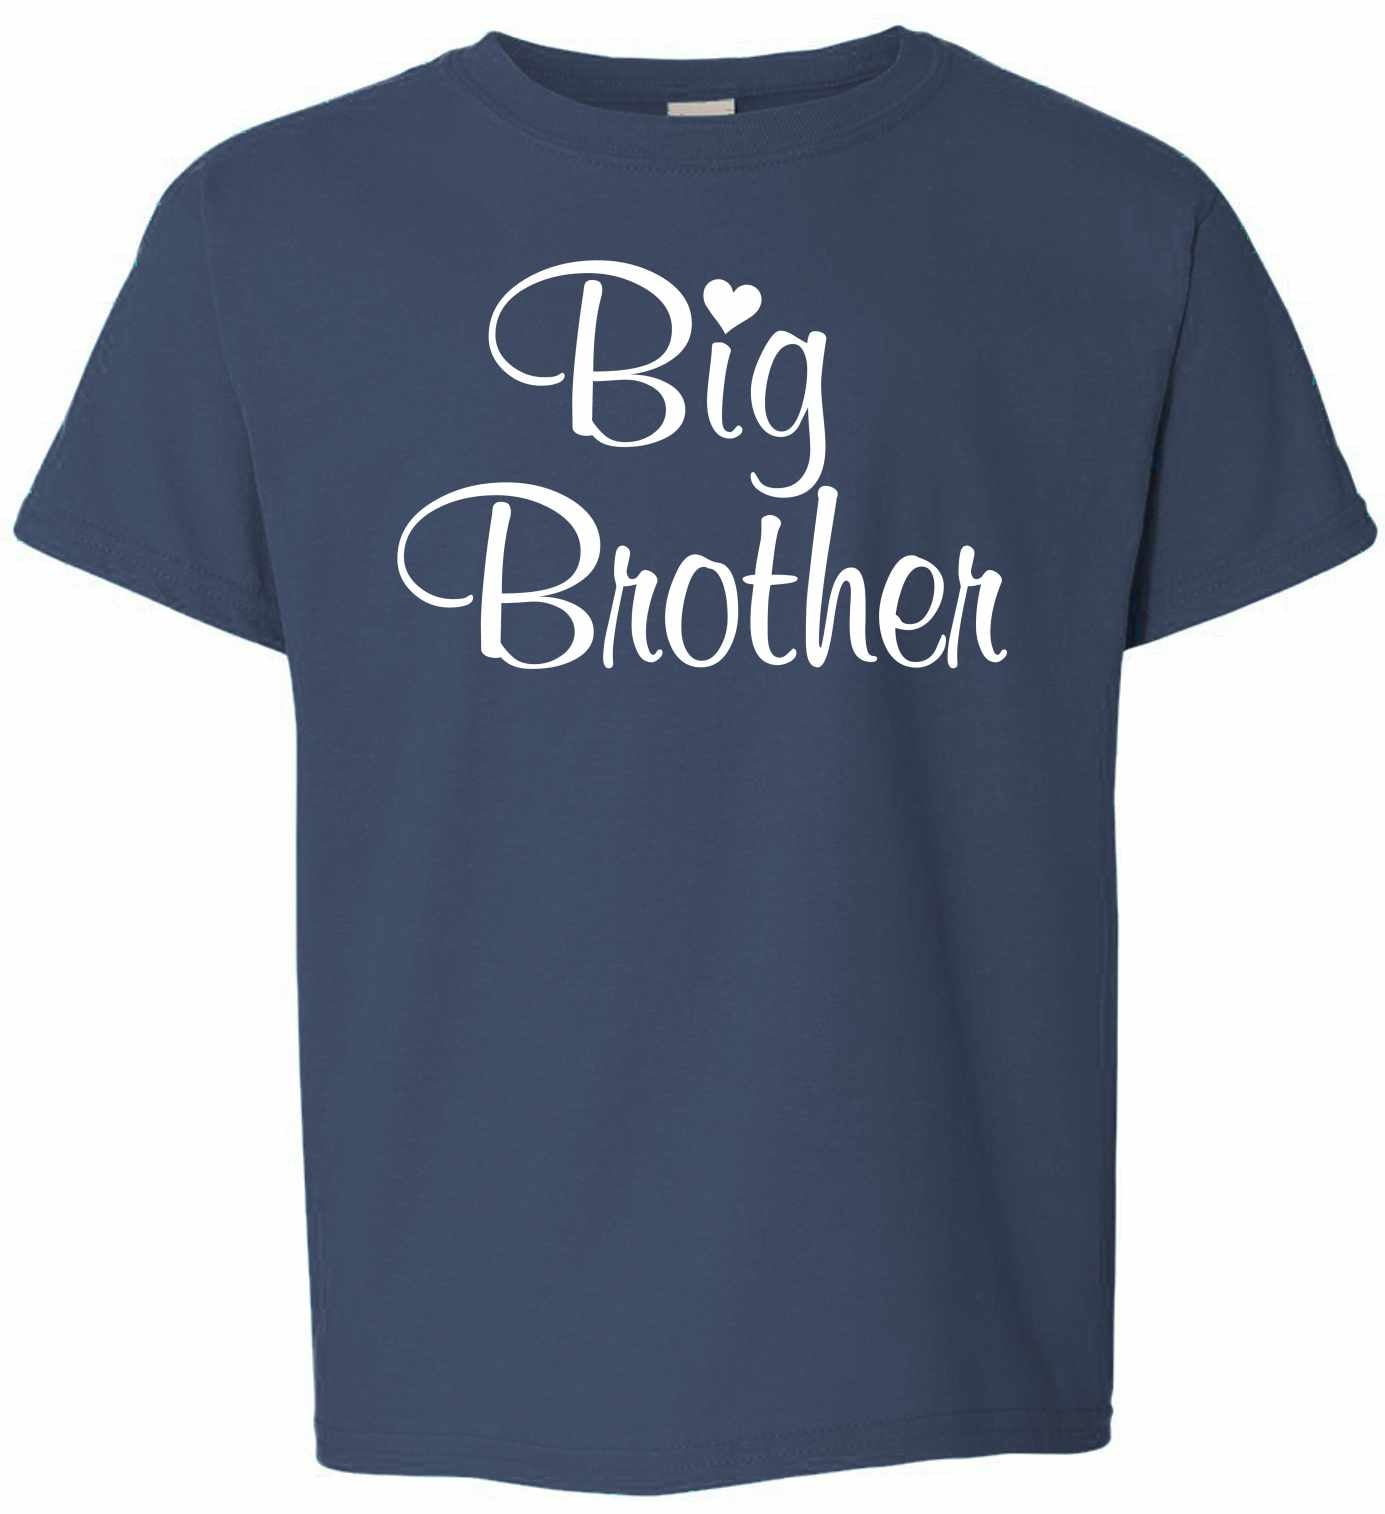 Big Brother on Kids T-Shirt (#1344-201)